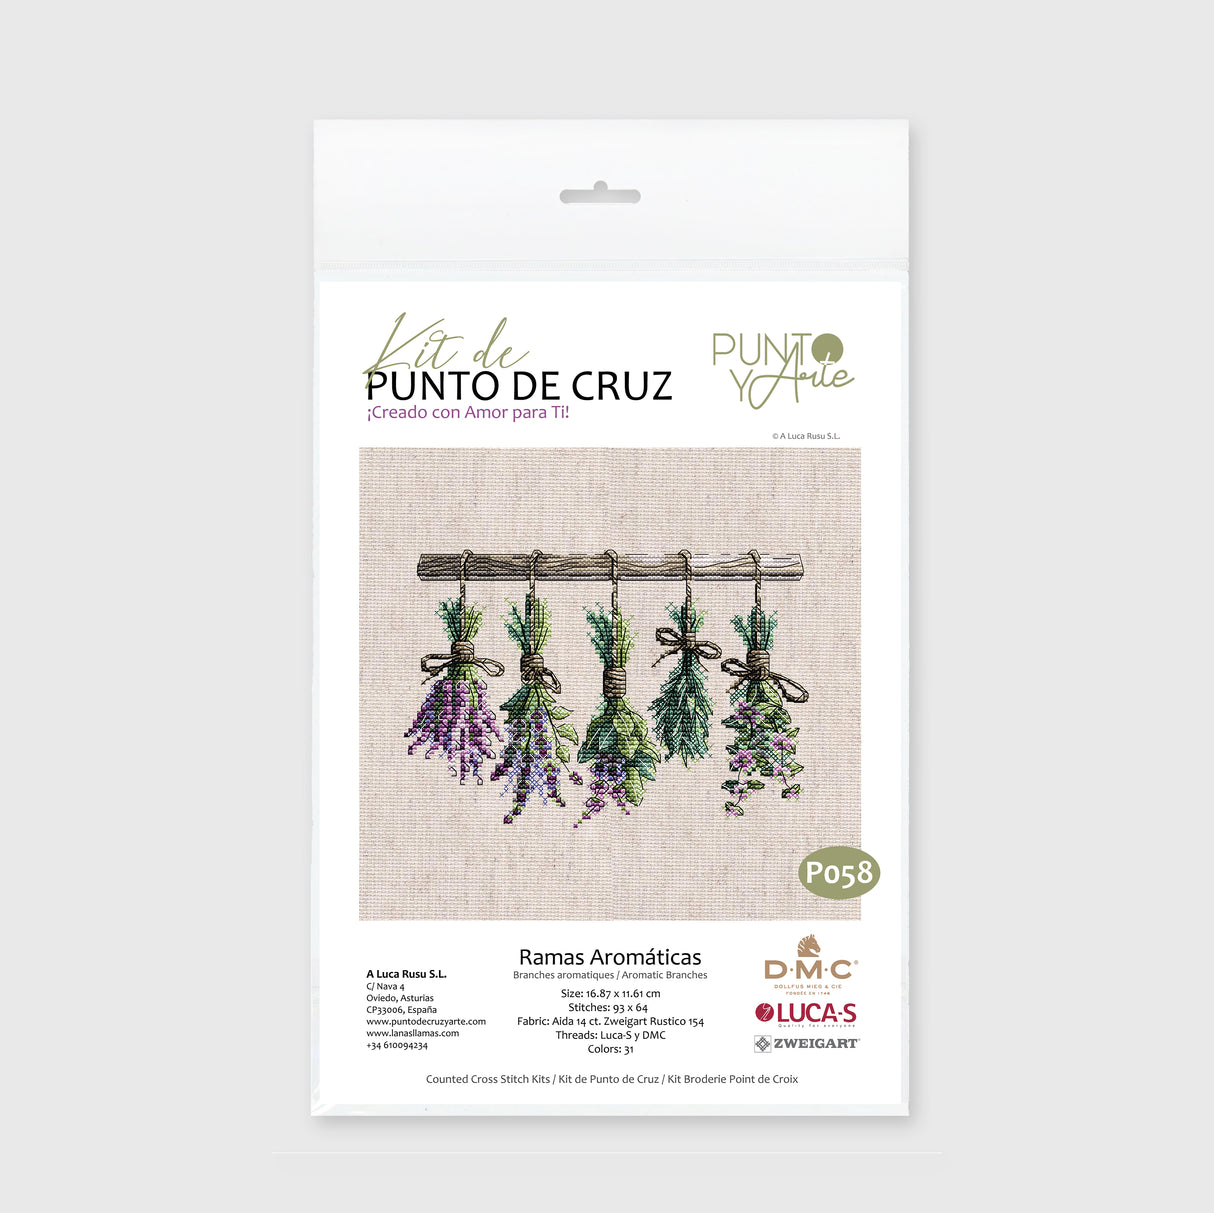 Kit de Punto de Cruz - P058 Punto y Arte - Ramas Aromáticas